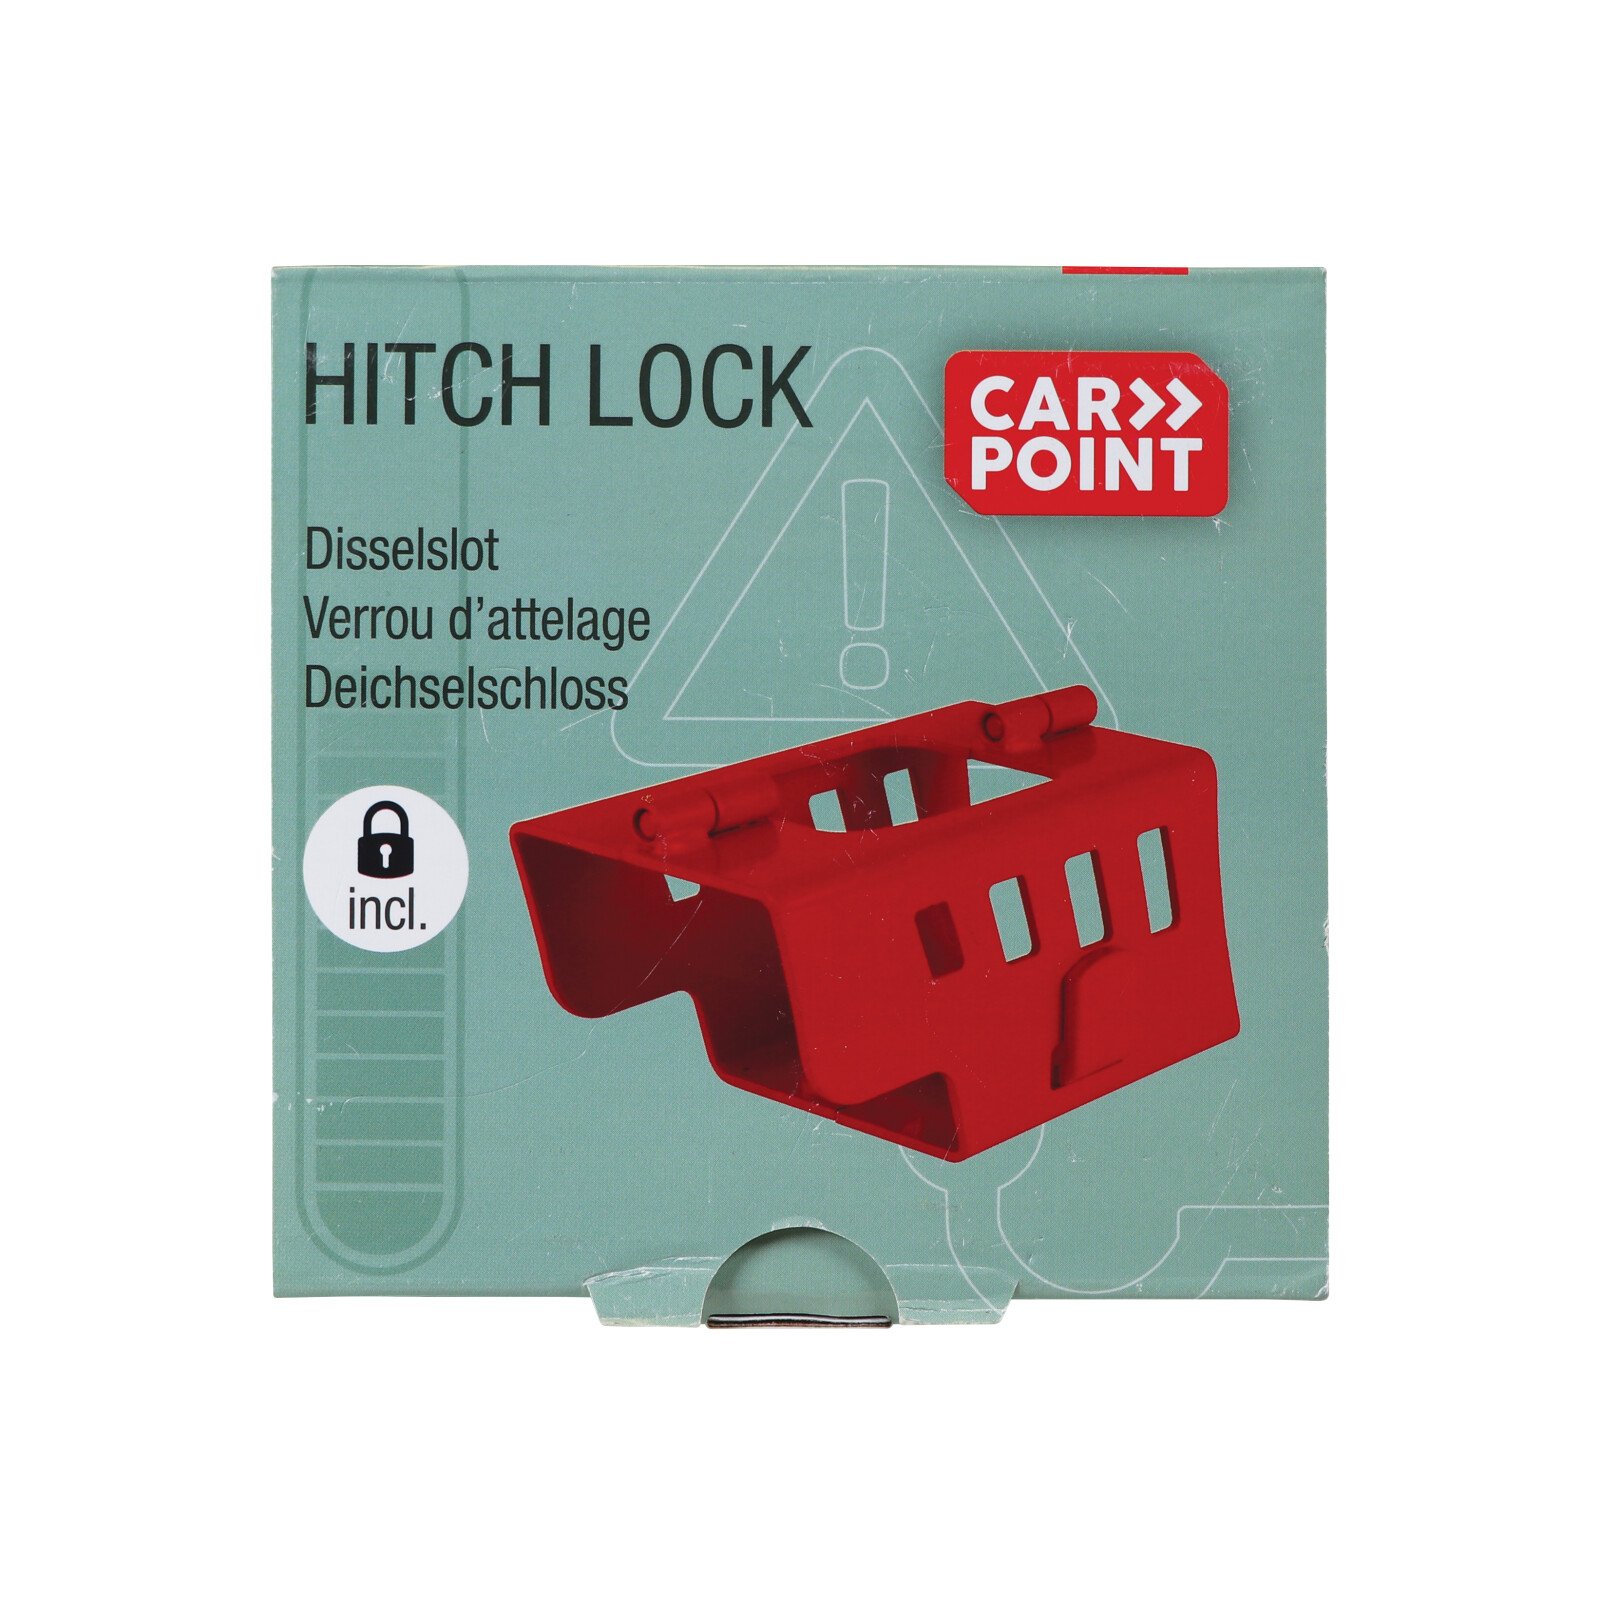 Carpoint Hitch Lock foldable with padlock thumb